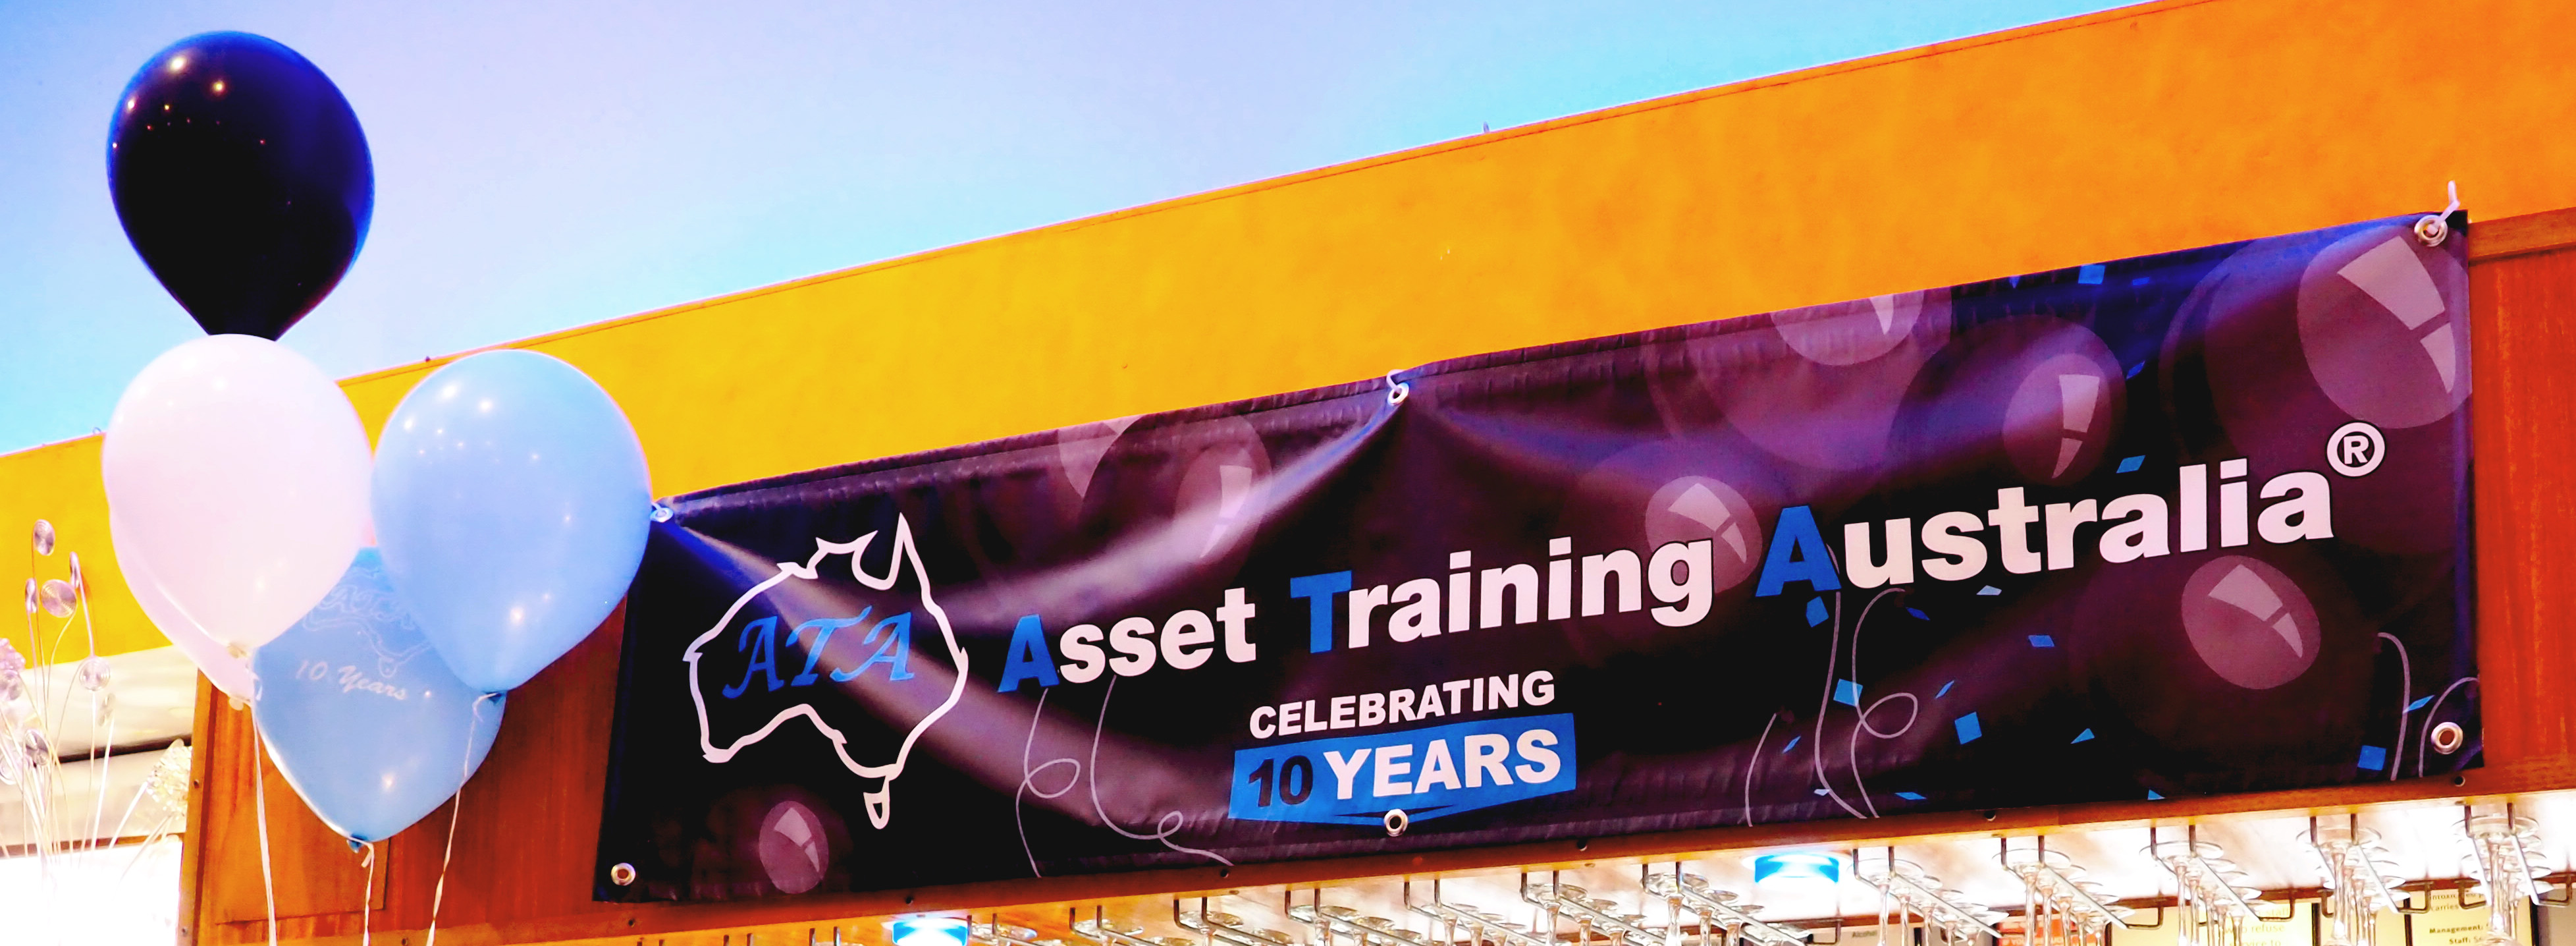 Asset Training Australia turns 10!